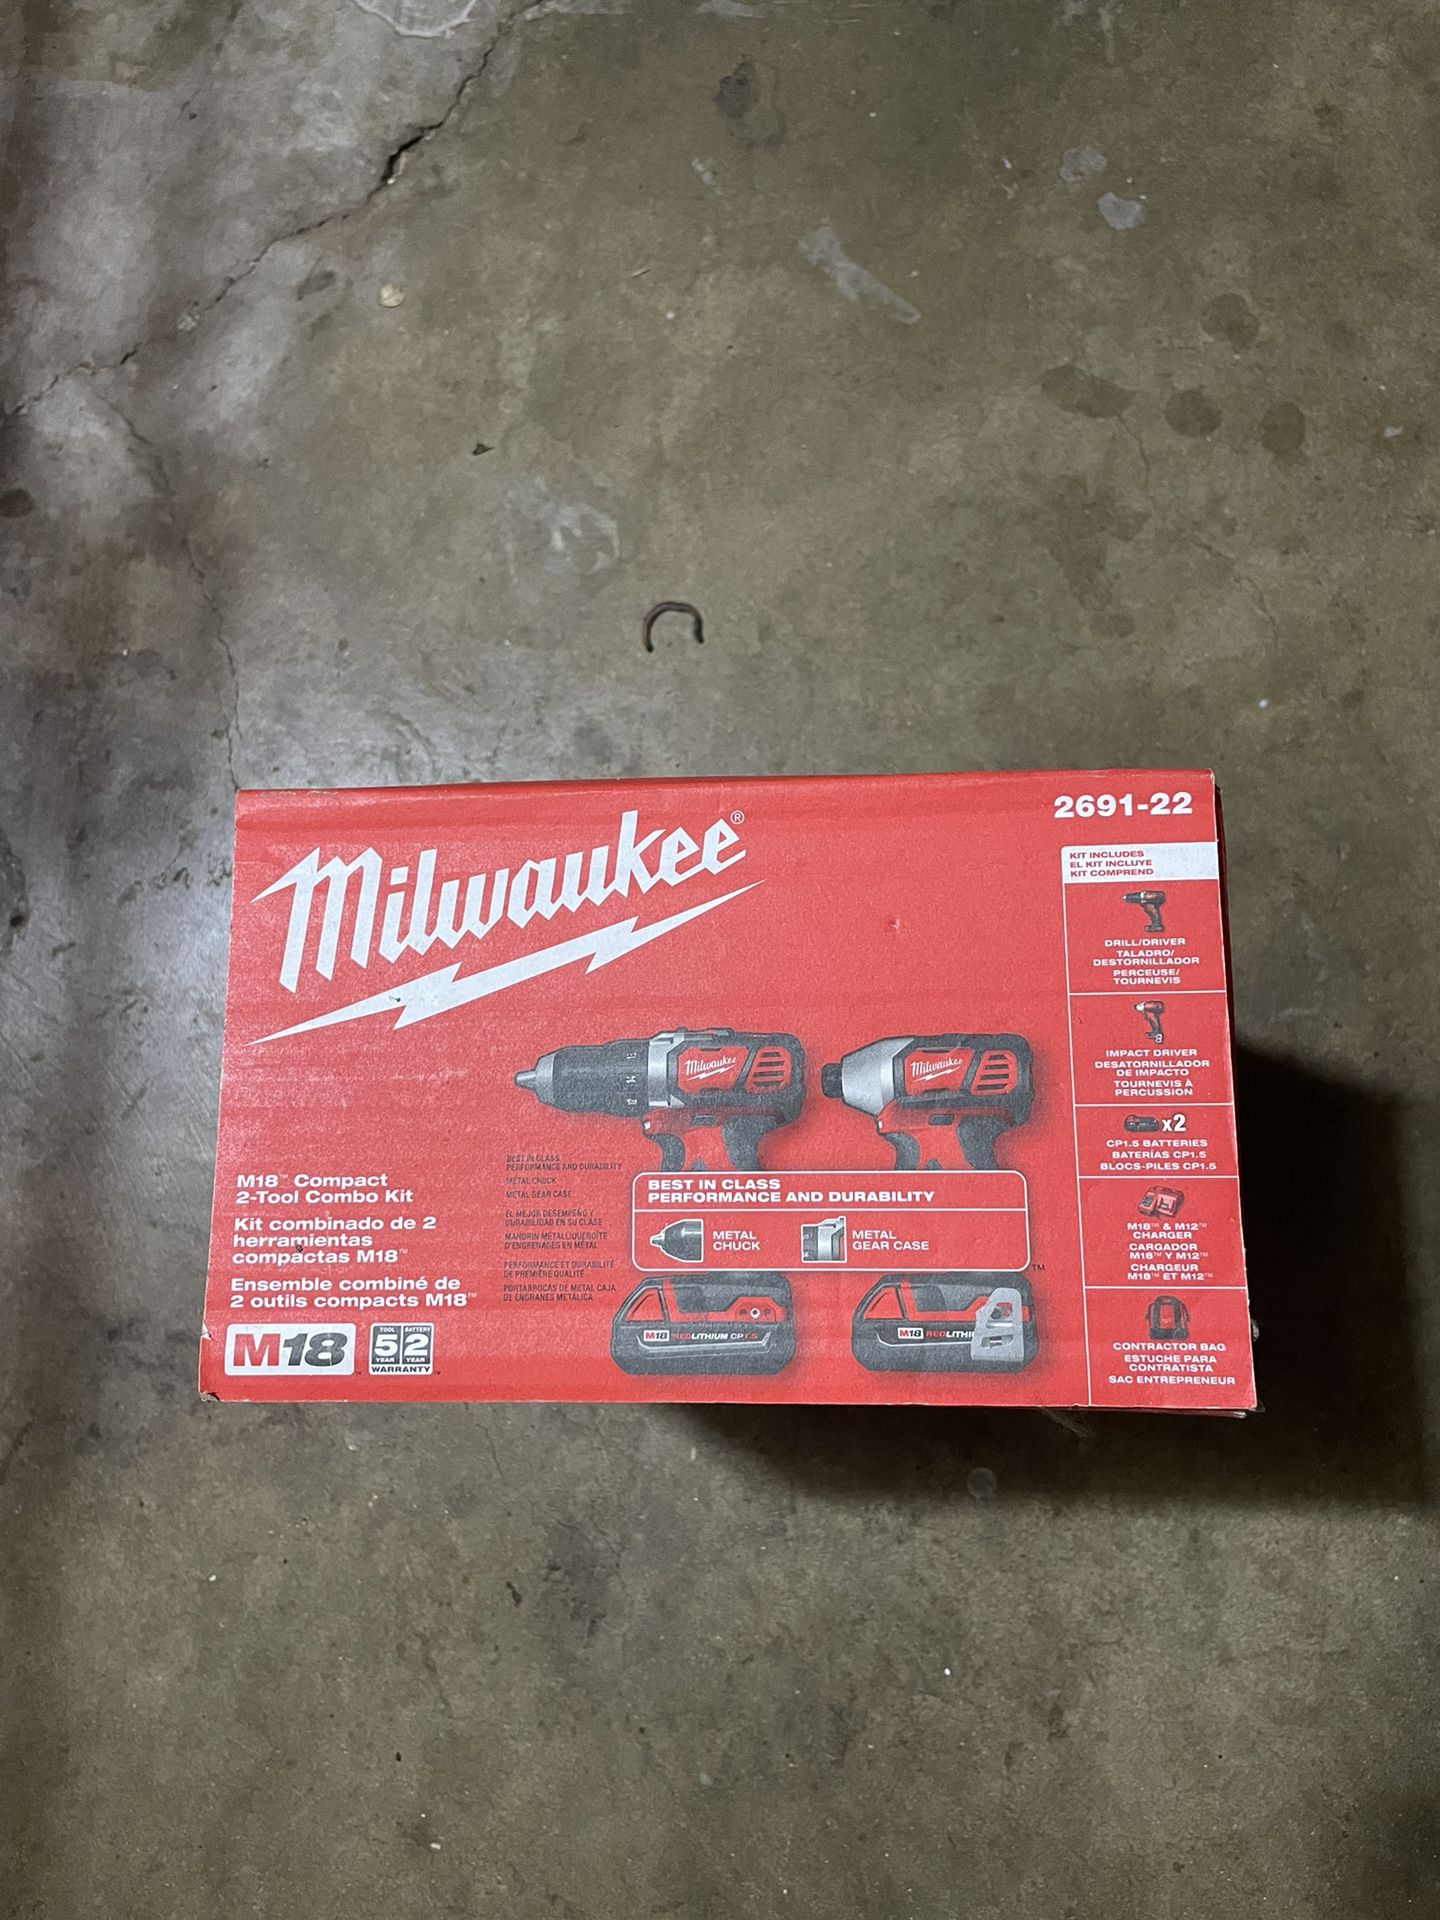 New Milwaukee Drill set / Nuevo Taladro Milwaukee